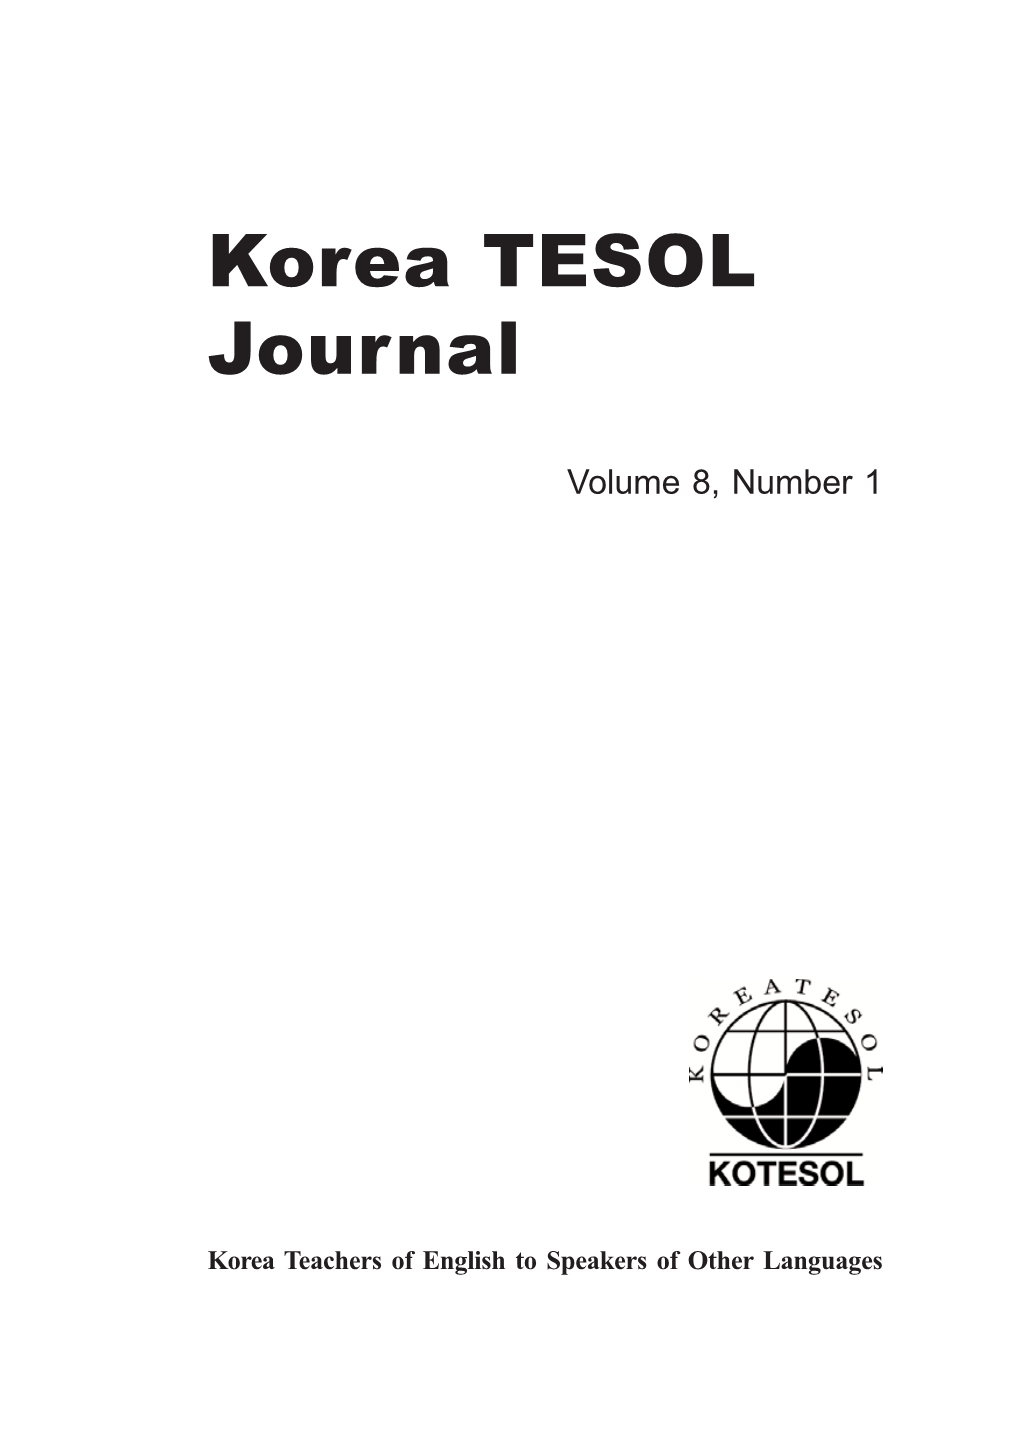 Korea Tesol Journal Vol 8, No 1